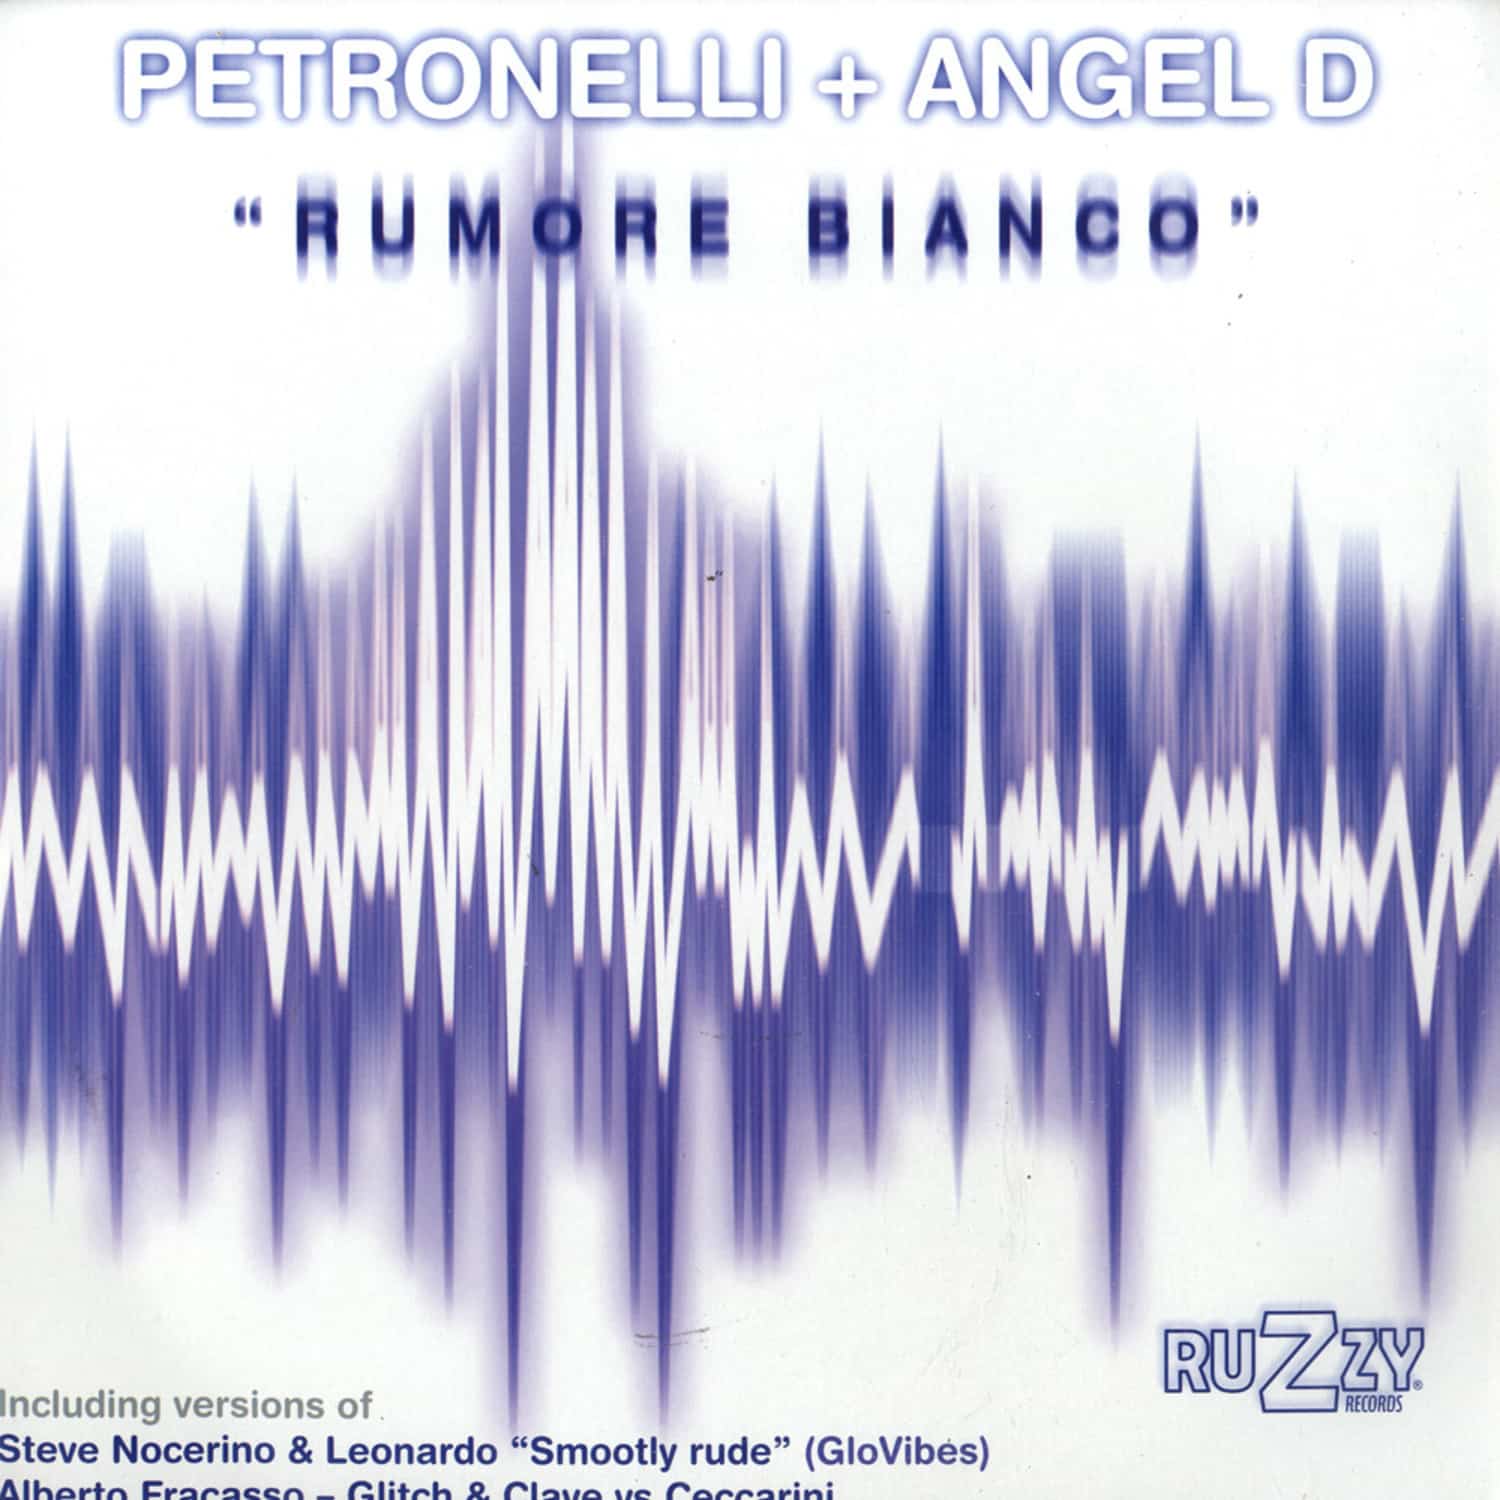 Petronelli & Angel D - RUMORE BIANCO